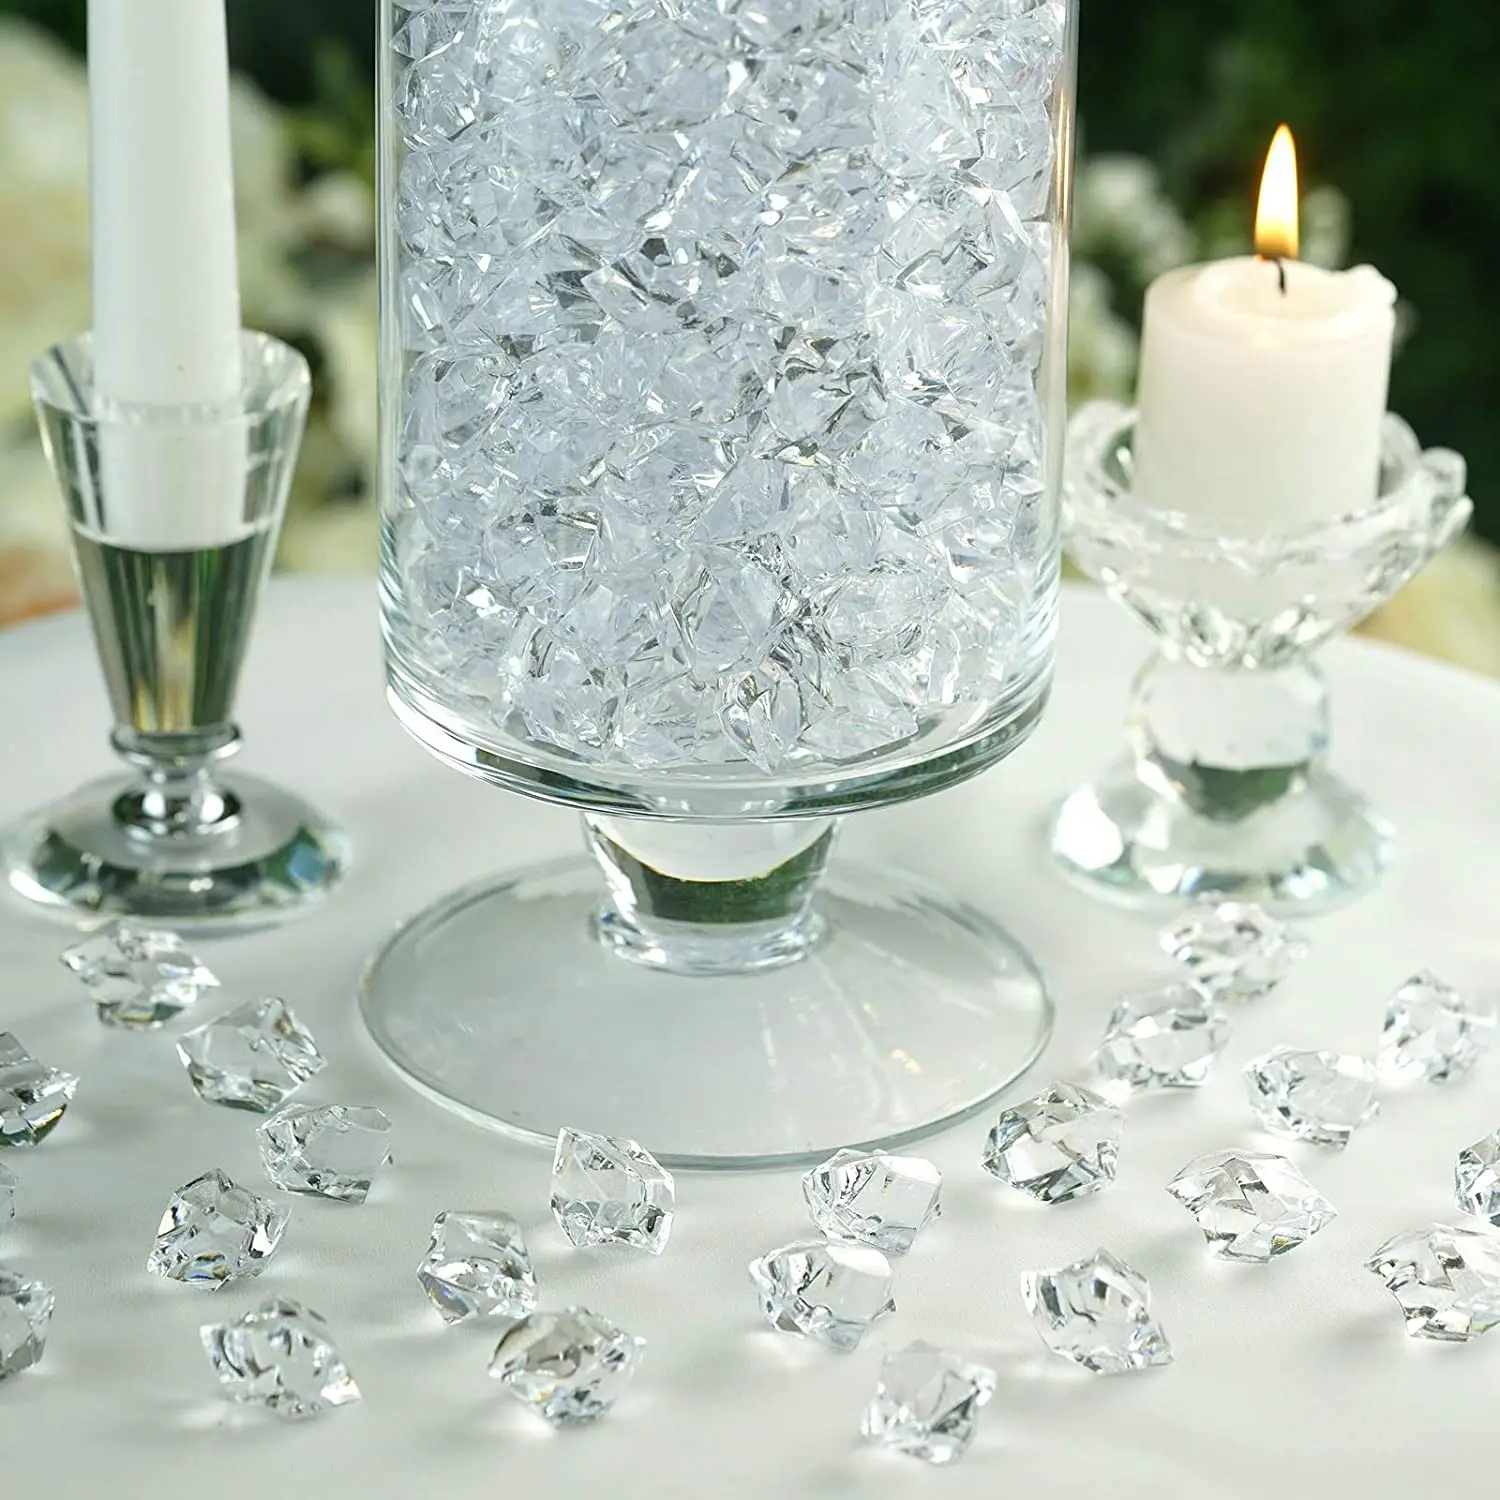 100 Fake Diamonds Vase Filler Confetti Diamond Gems Fake Diamonds Table  Scatter Party Decoration Party Favors Wedding Centerpieces 